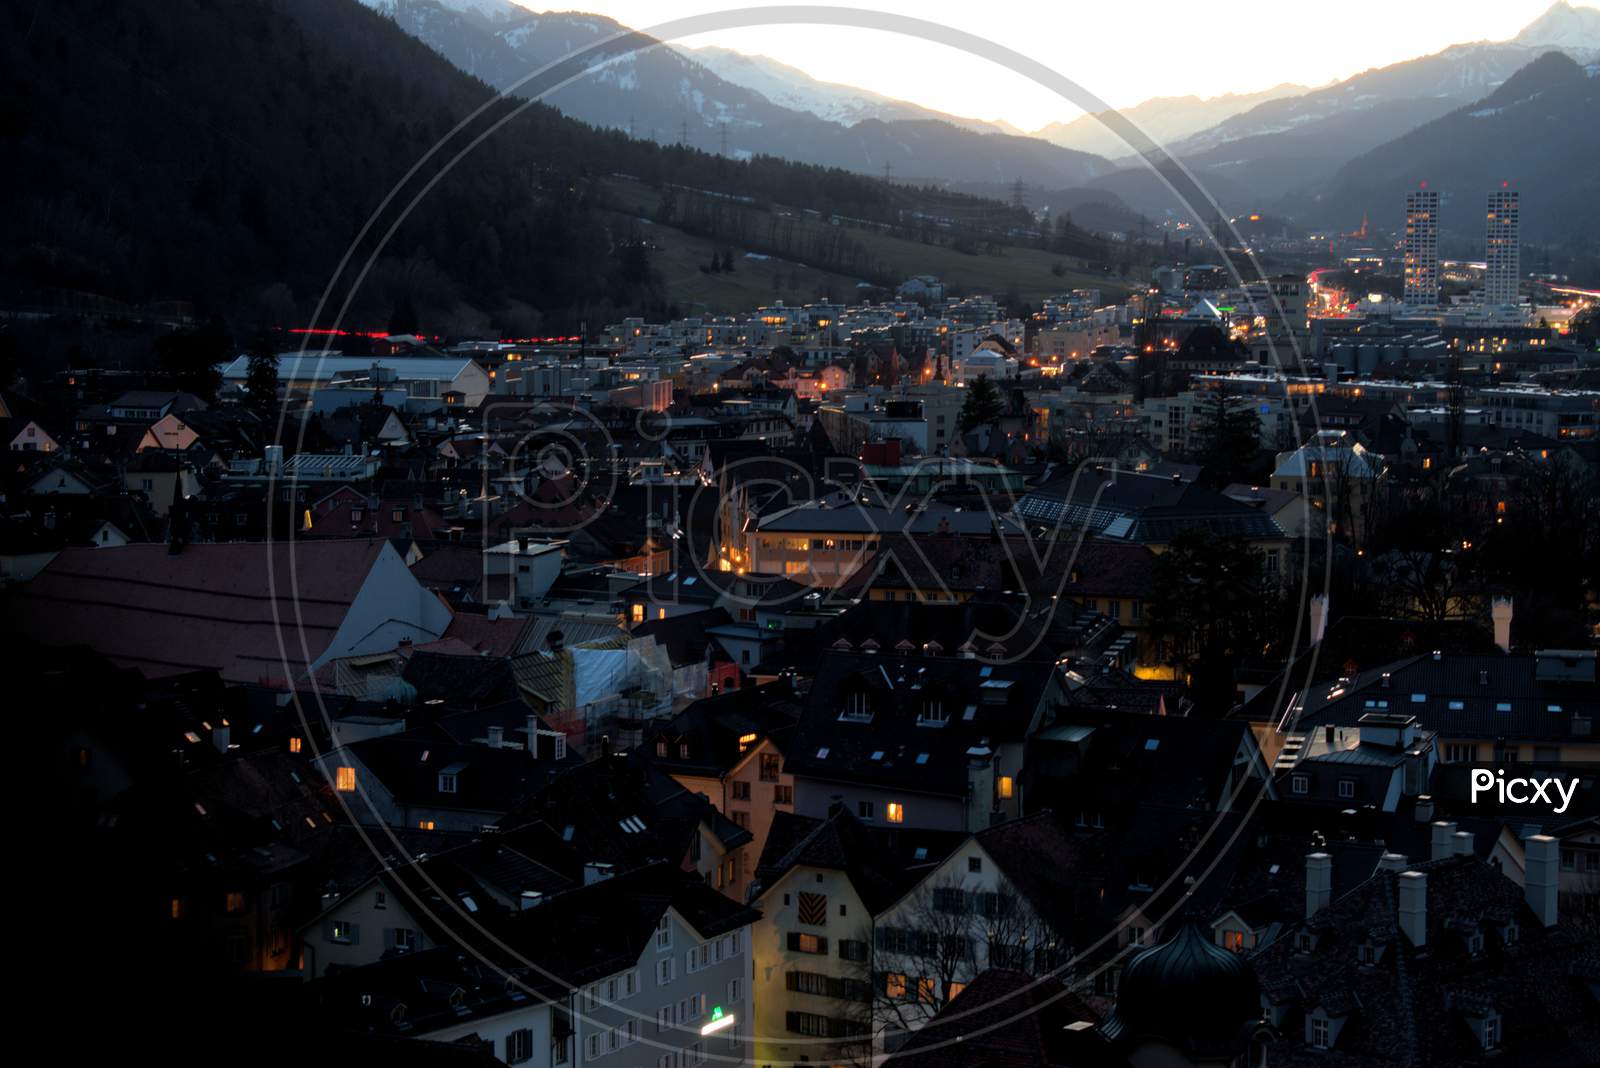 Evening Mood In Chur In Switzerland 20.2.2021